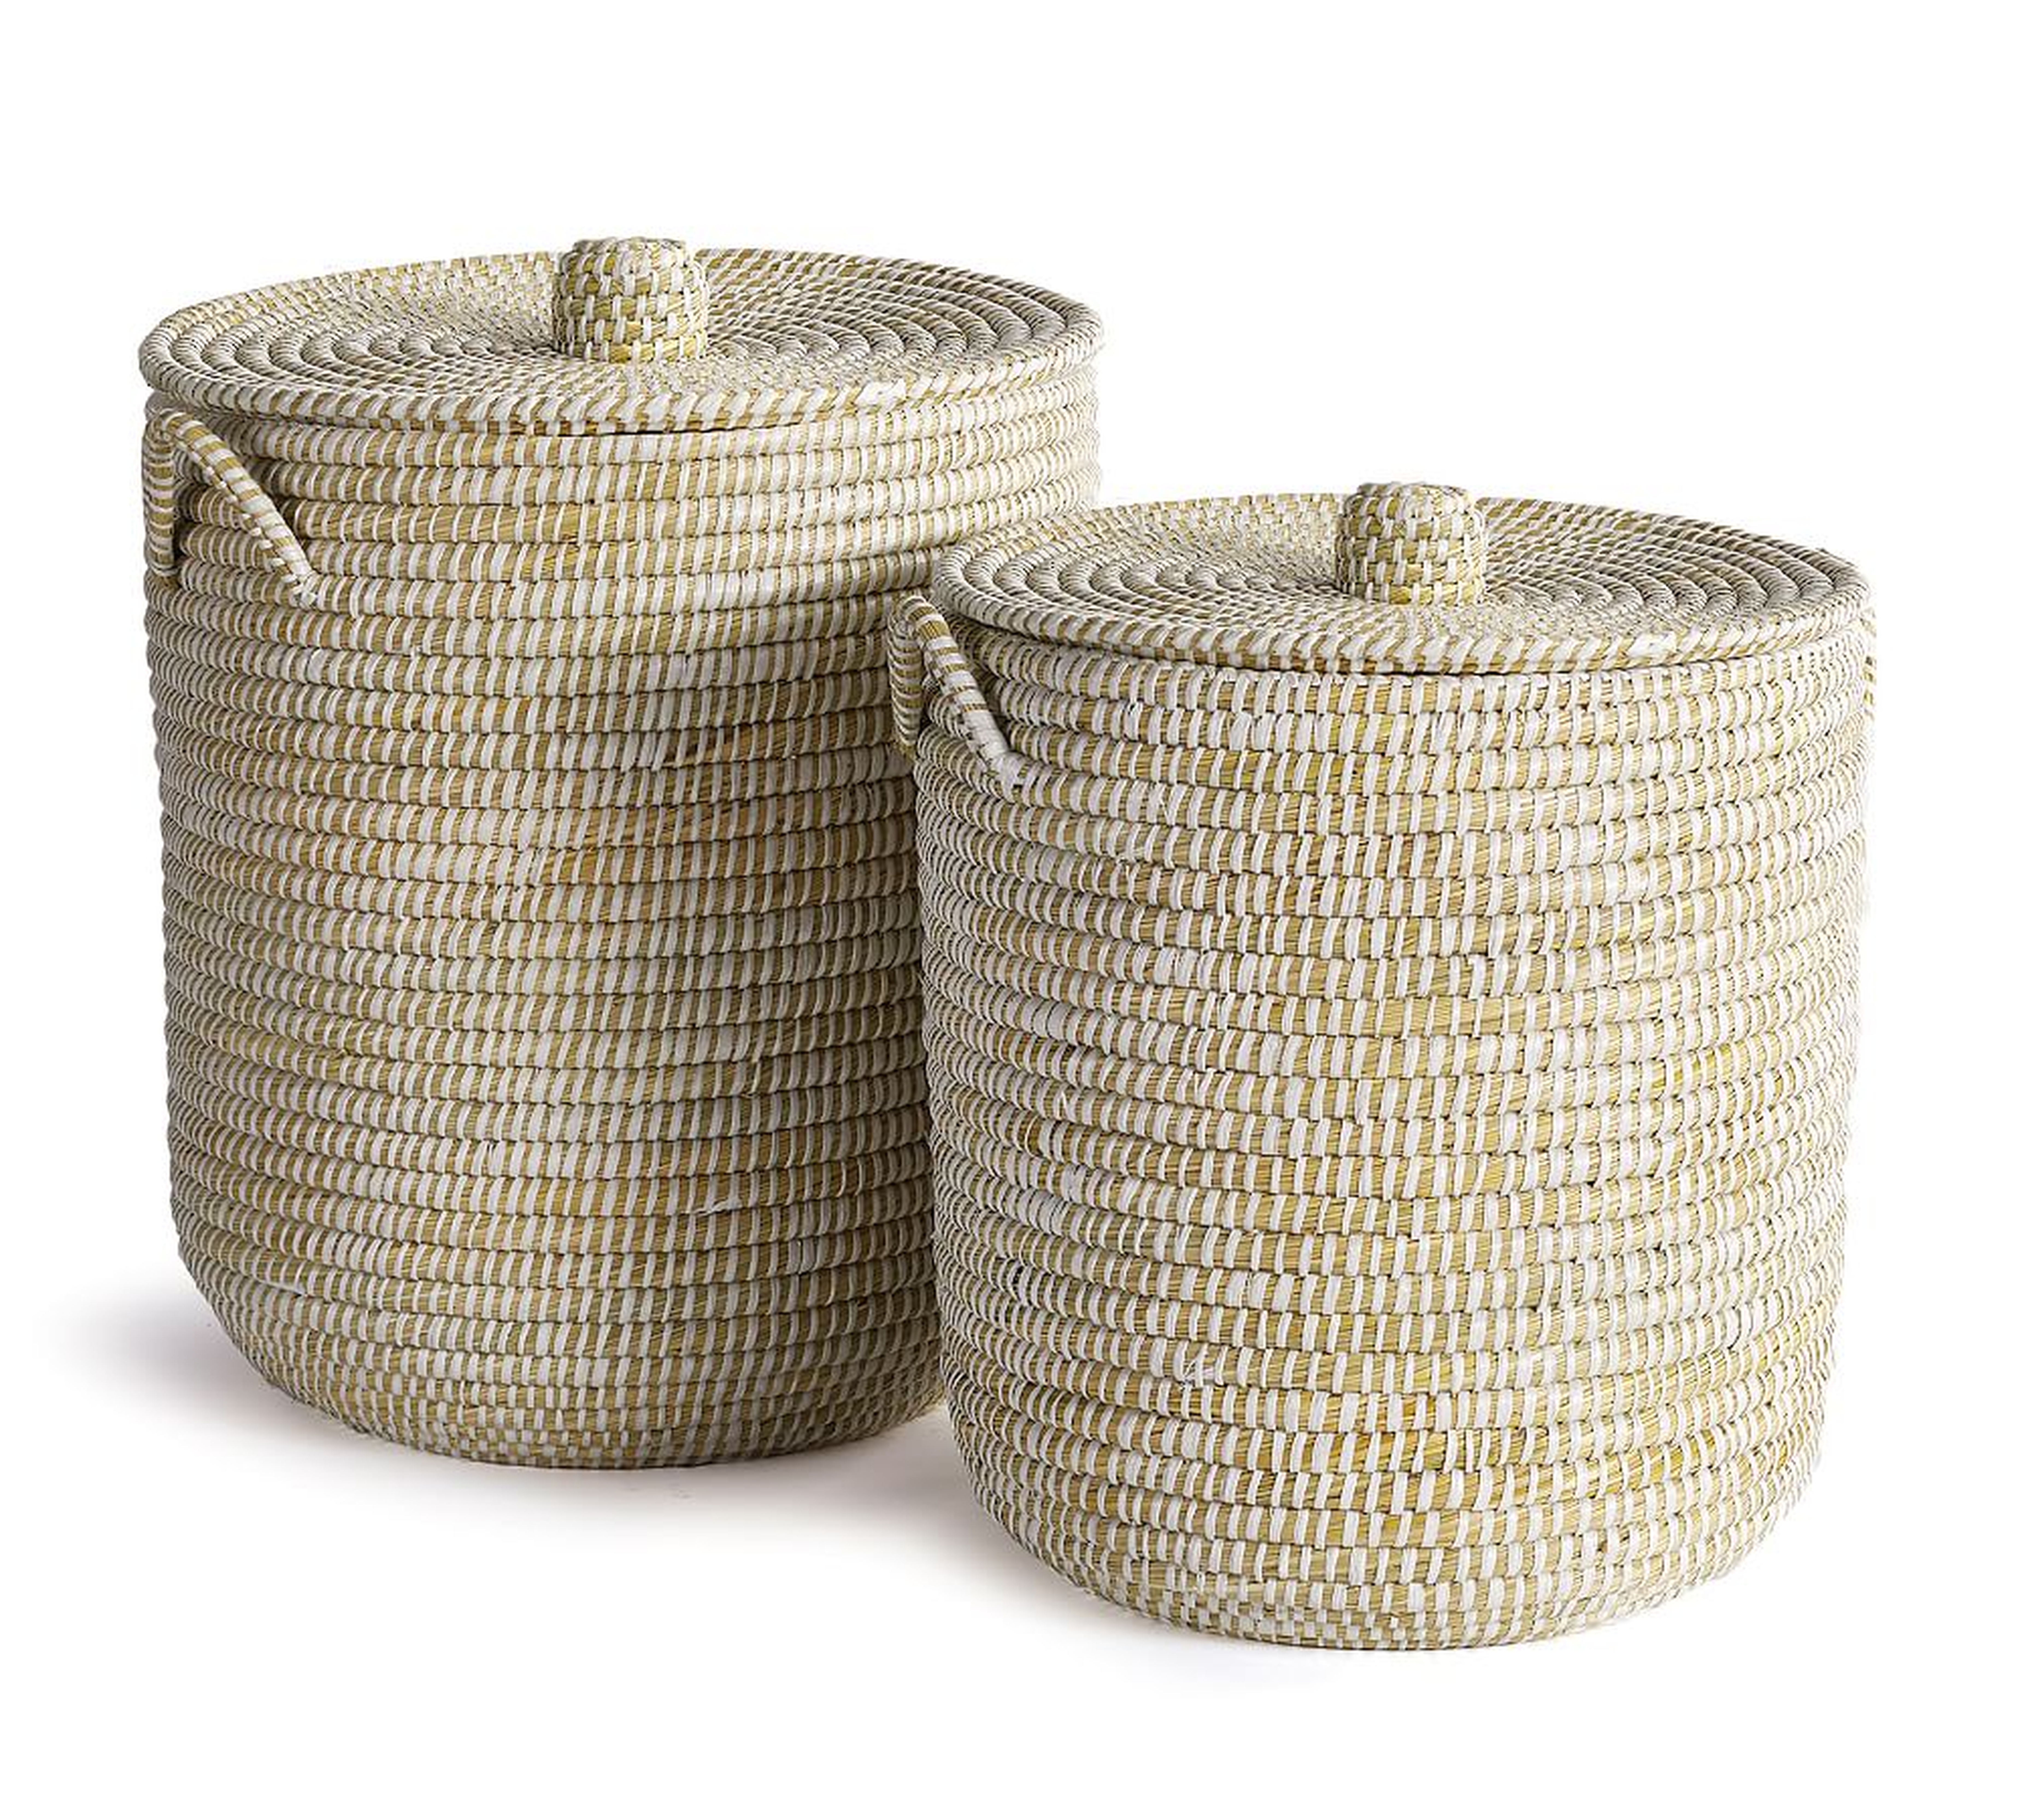 Dahlia White Rivergrass Hamper Baskets With Lids, Set of 2 - Pottery Barn